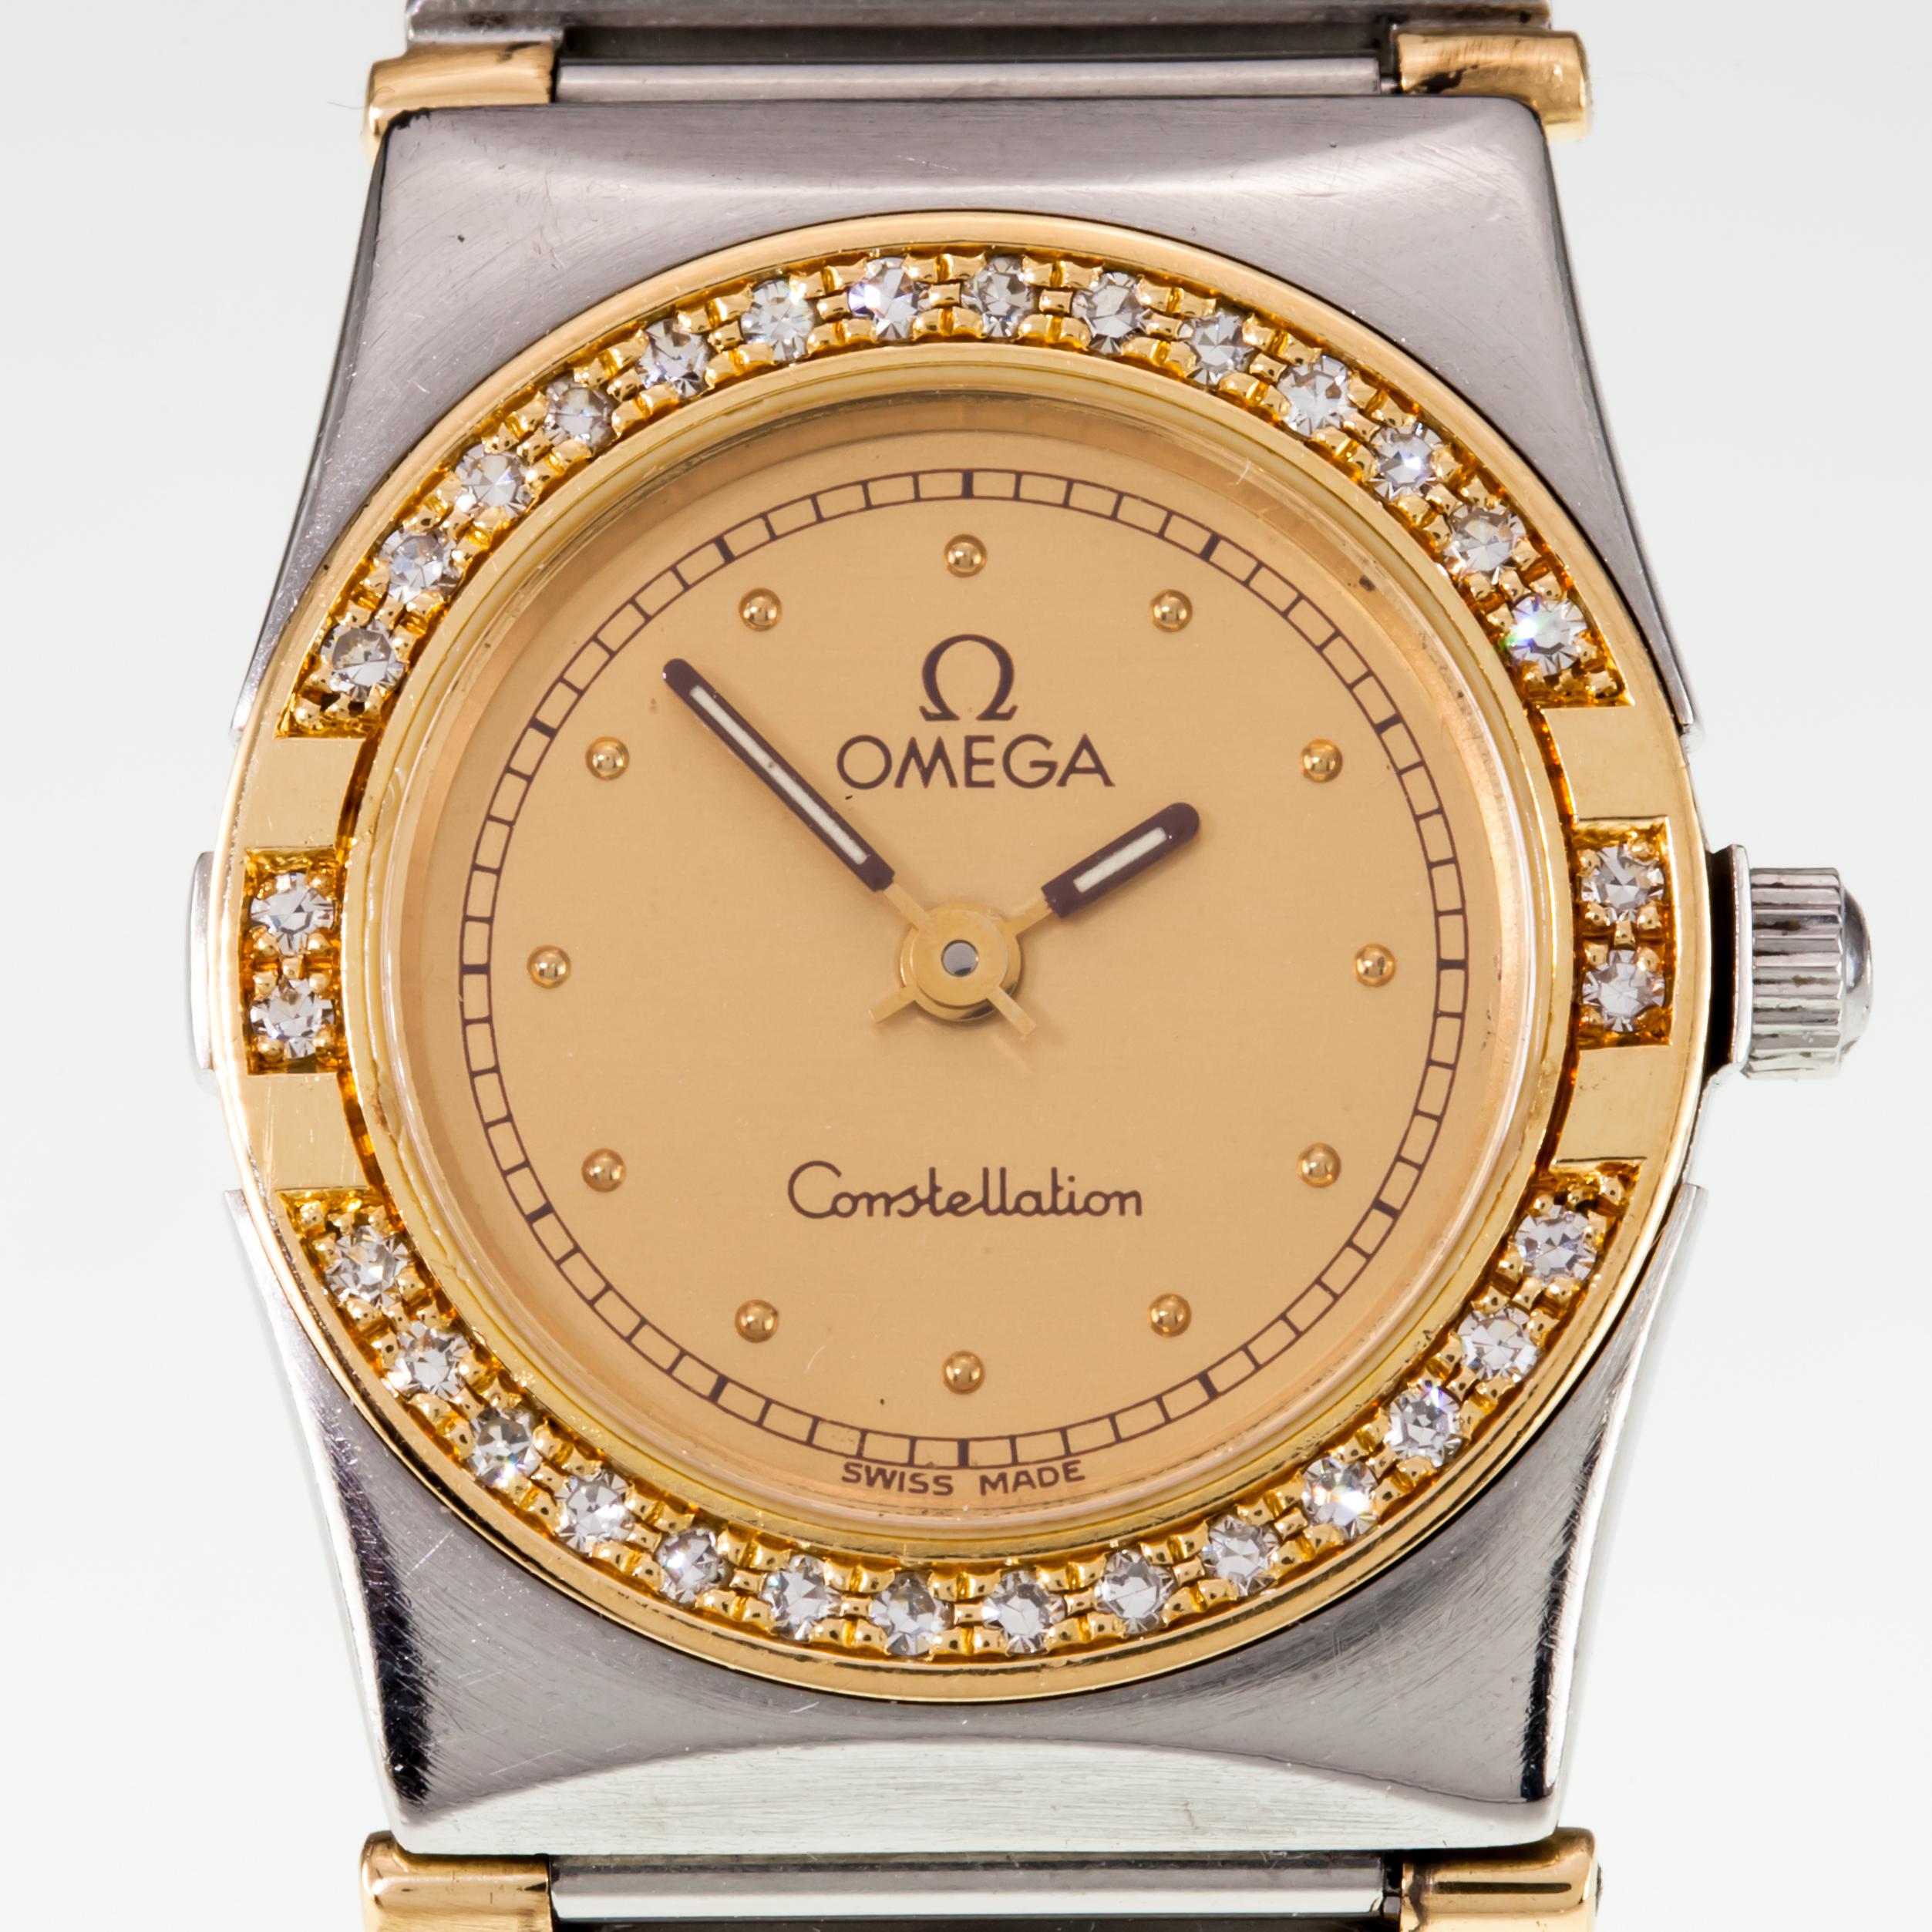 Omega Ladies Mini Constellation Two-Tone Quartz Watch w/ Diamonds
Movement #1455.976001
Case #8951080
Stainless Steel Case w/ 18k Yellow Gold Diamond Bezel
22 mm in Diameter (24 mm w/ Crown)
Lug-to-Lug Width = 16 mm
Lug-to-Lug Distance = 25 mm
Gold